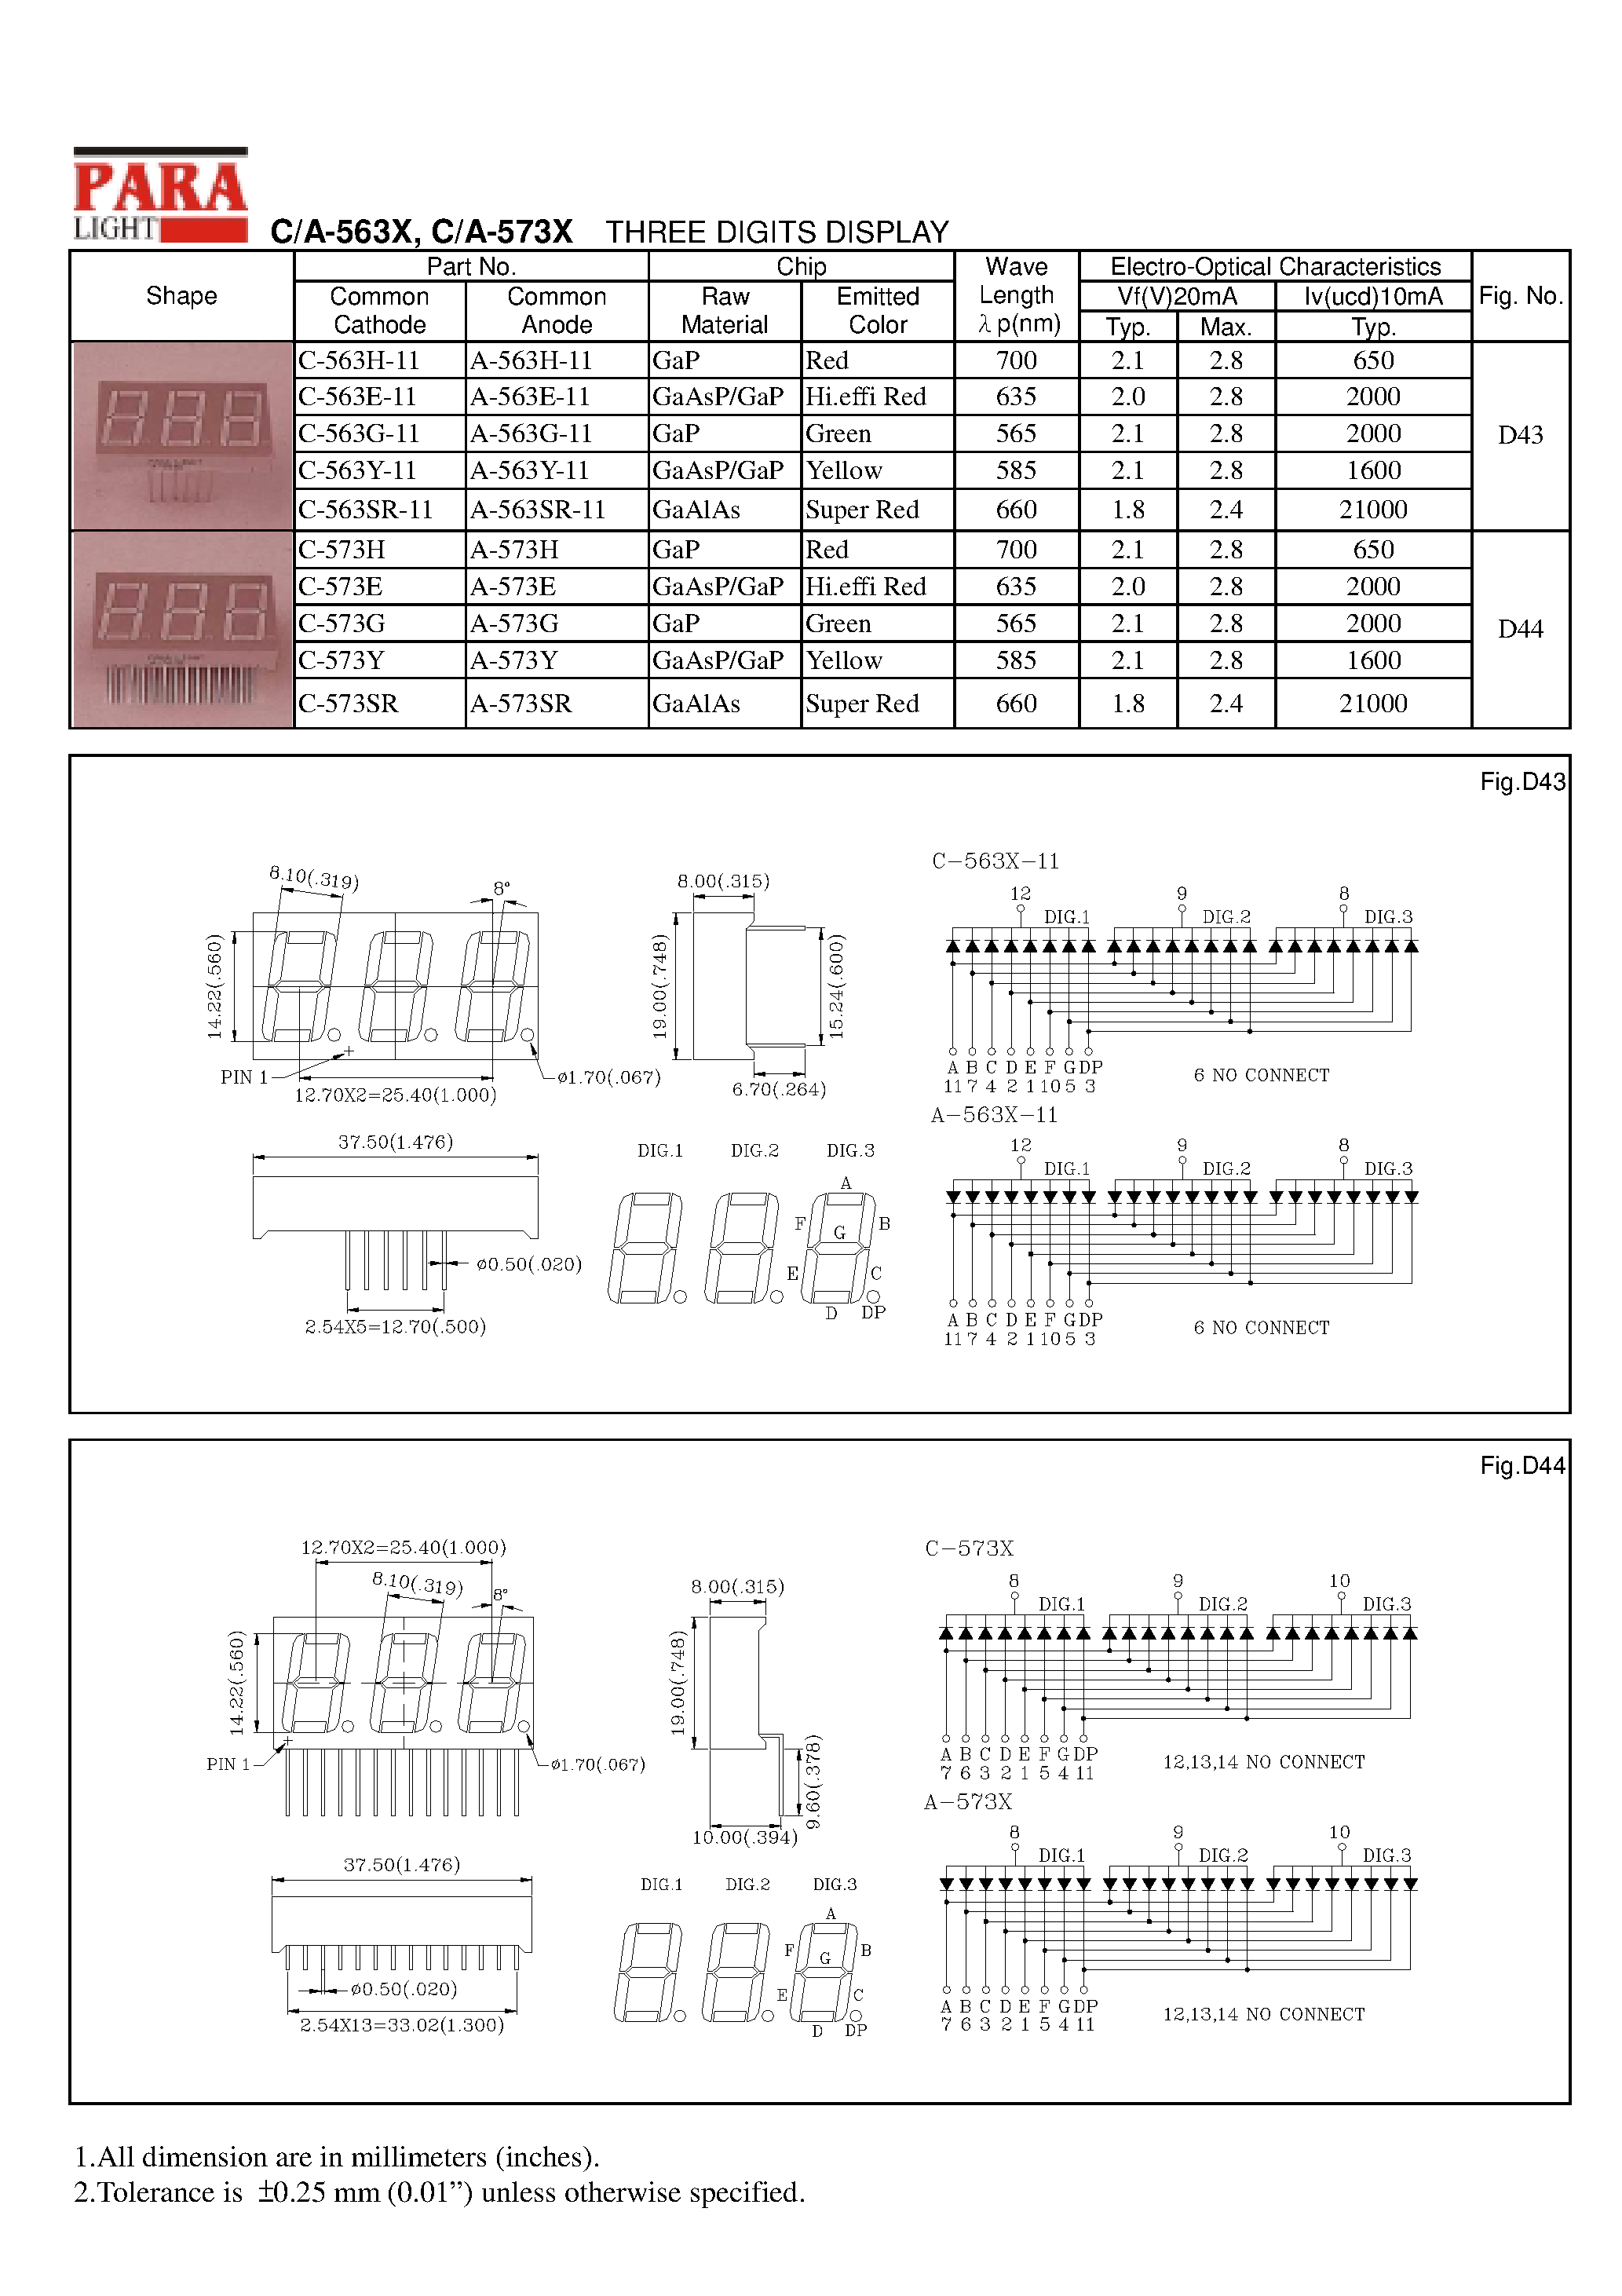 Datasheet A-563SR-11 - THREE DIGITS DISPLAY page 1